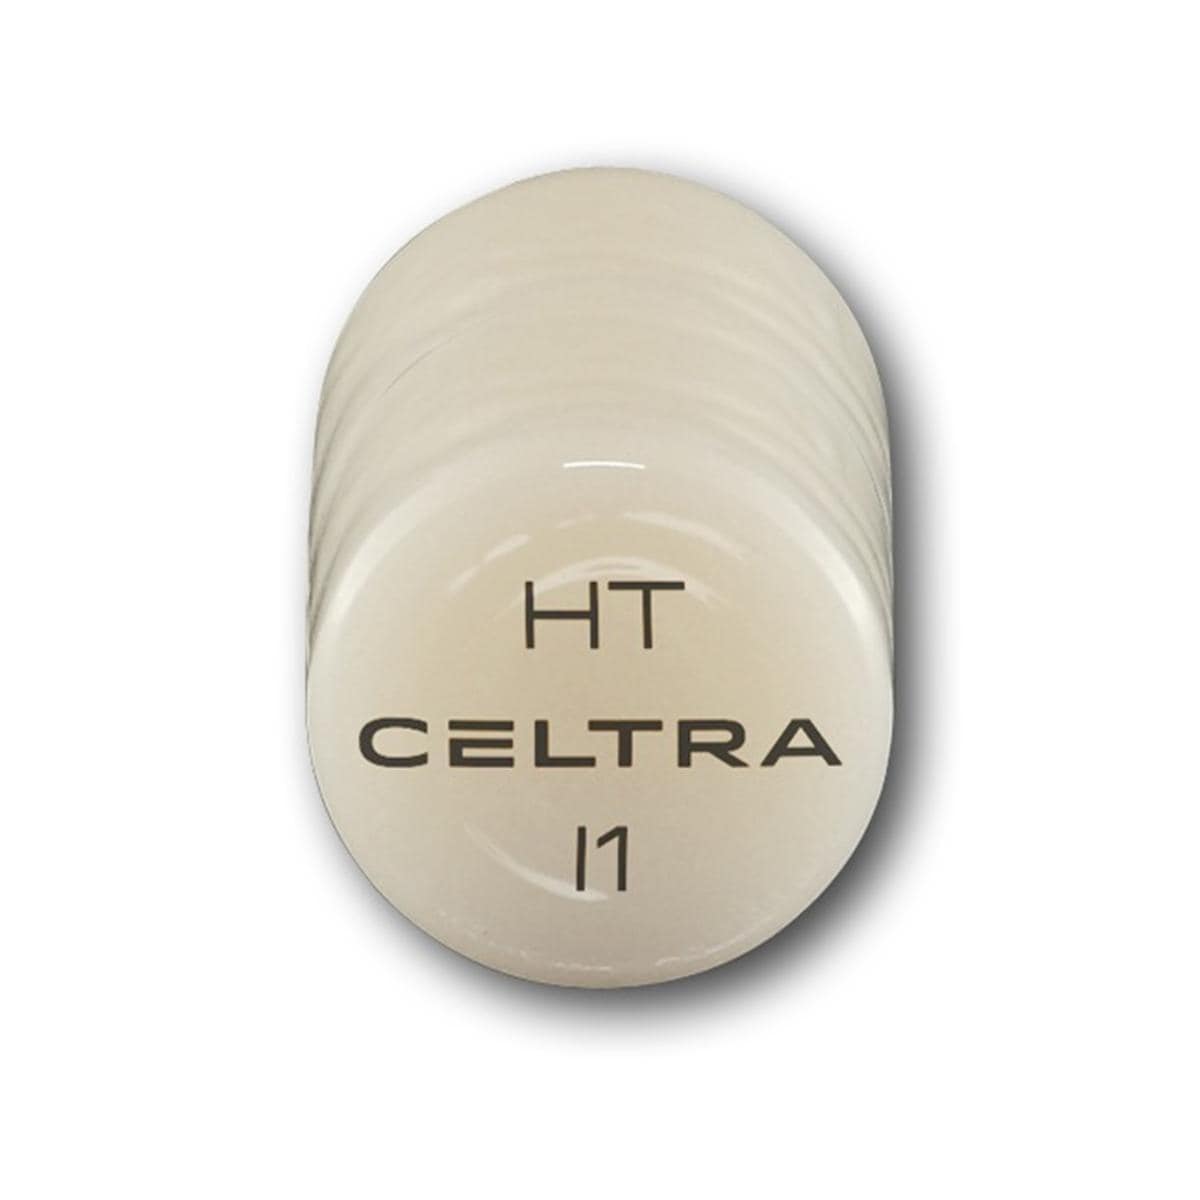 CELTRA® Press HT - I1, Packung 3 x 6 g